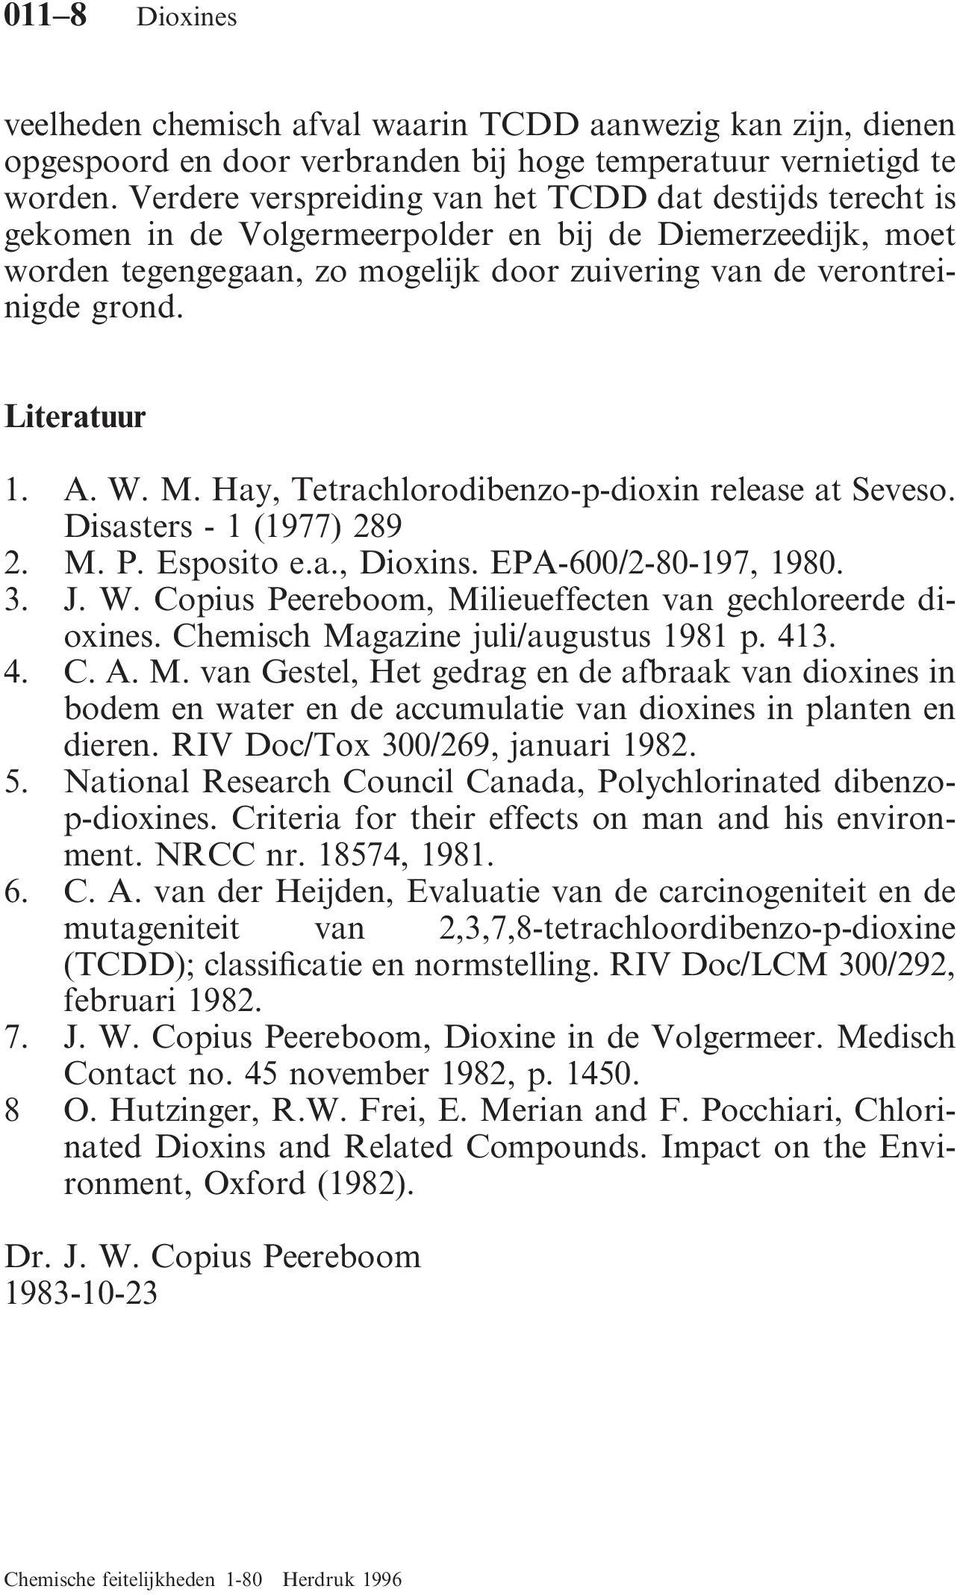 Literatuur 1. A. W. M. Hay, Tetrachlorodibenzo-p-dioxin release at Seveso. Disasters - 1 (1977) 289 2. M. P. Esposito e.a., Dioxins. EPA-600/2-80-197, 1980. 3. J. W. Copius Peereboom, Milieueffecten van gechloreerde dioxines.